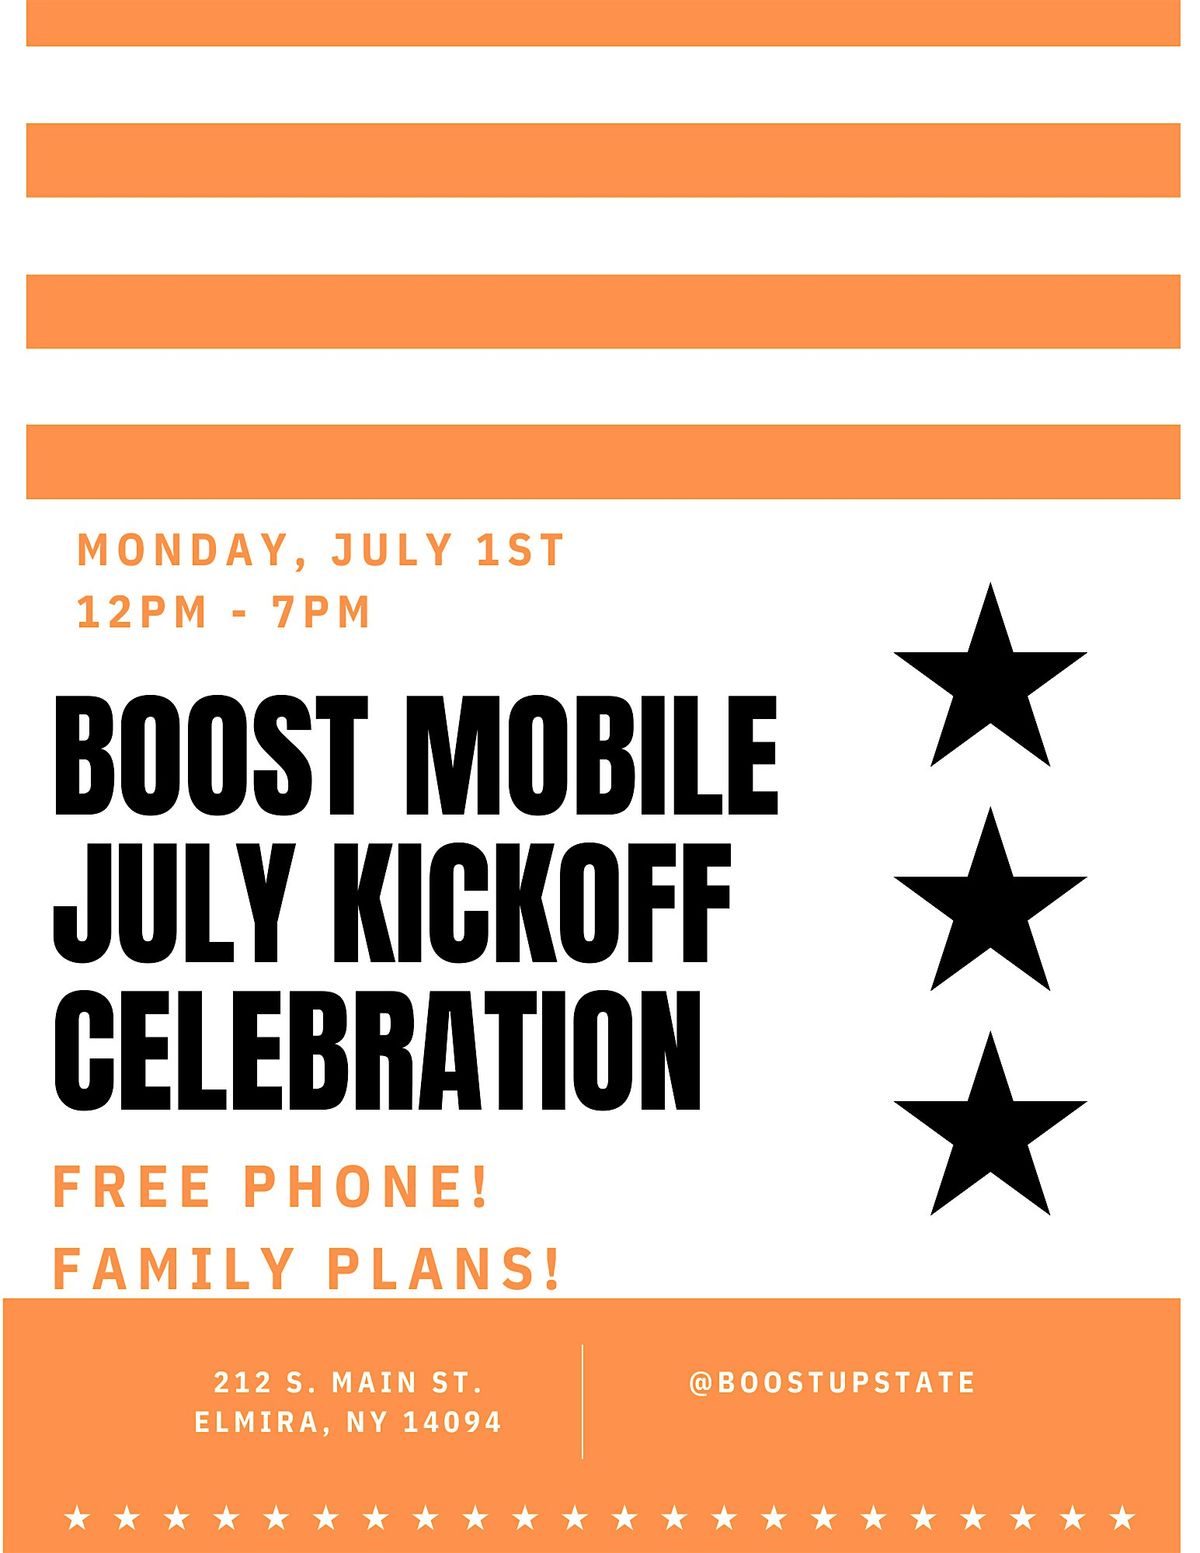 Boost Mobile - July kickoff celebration